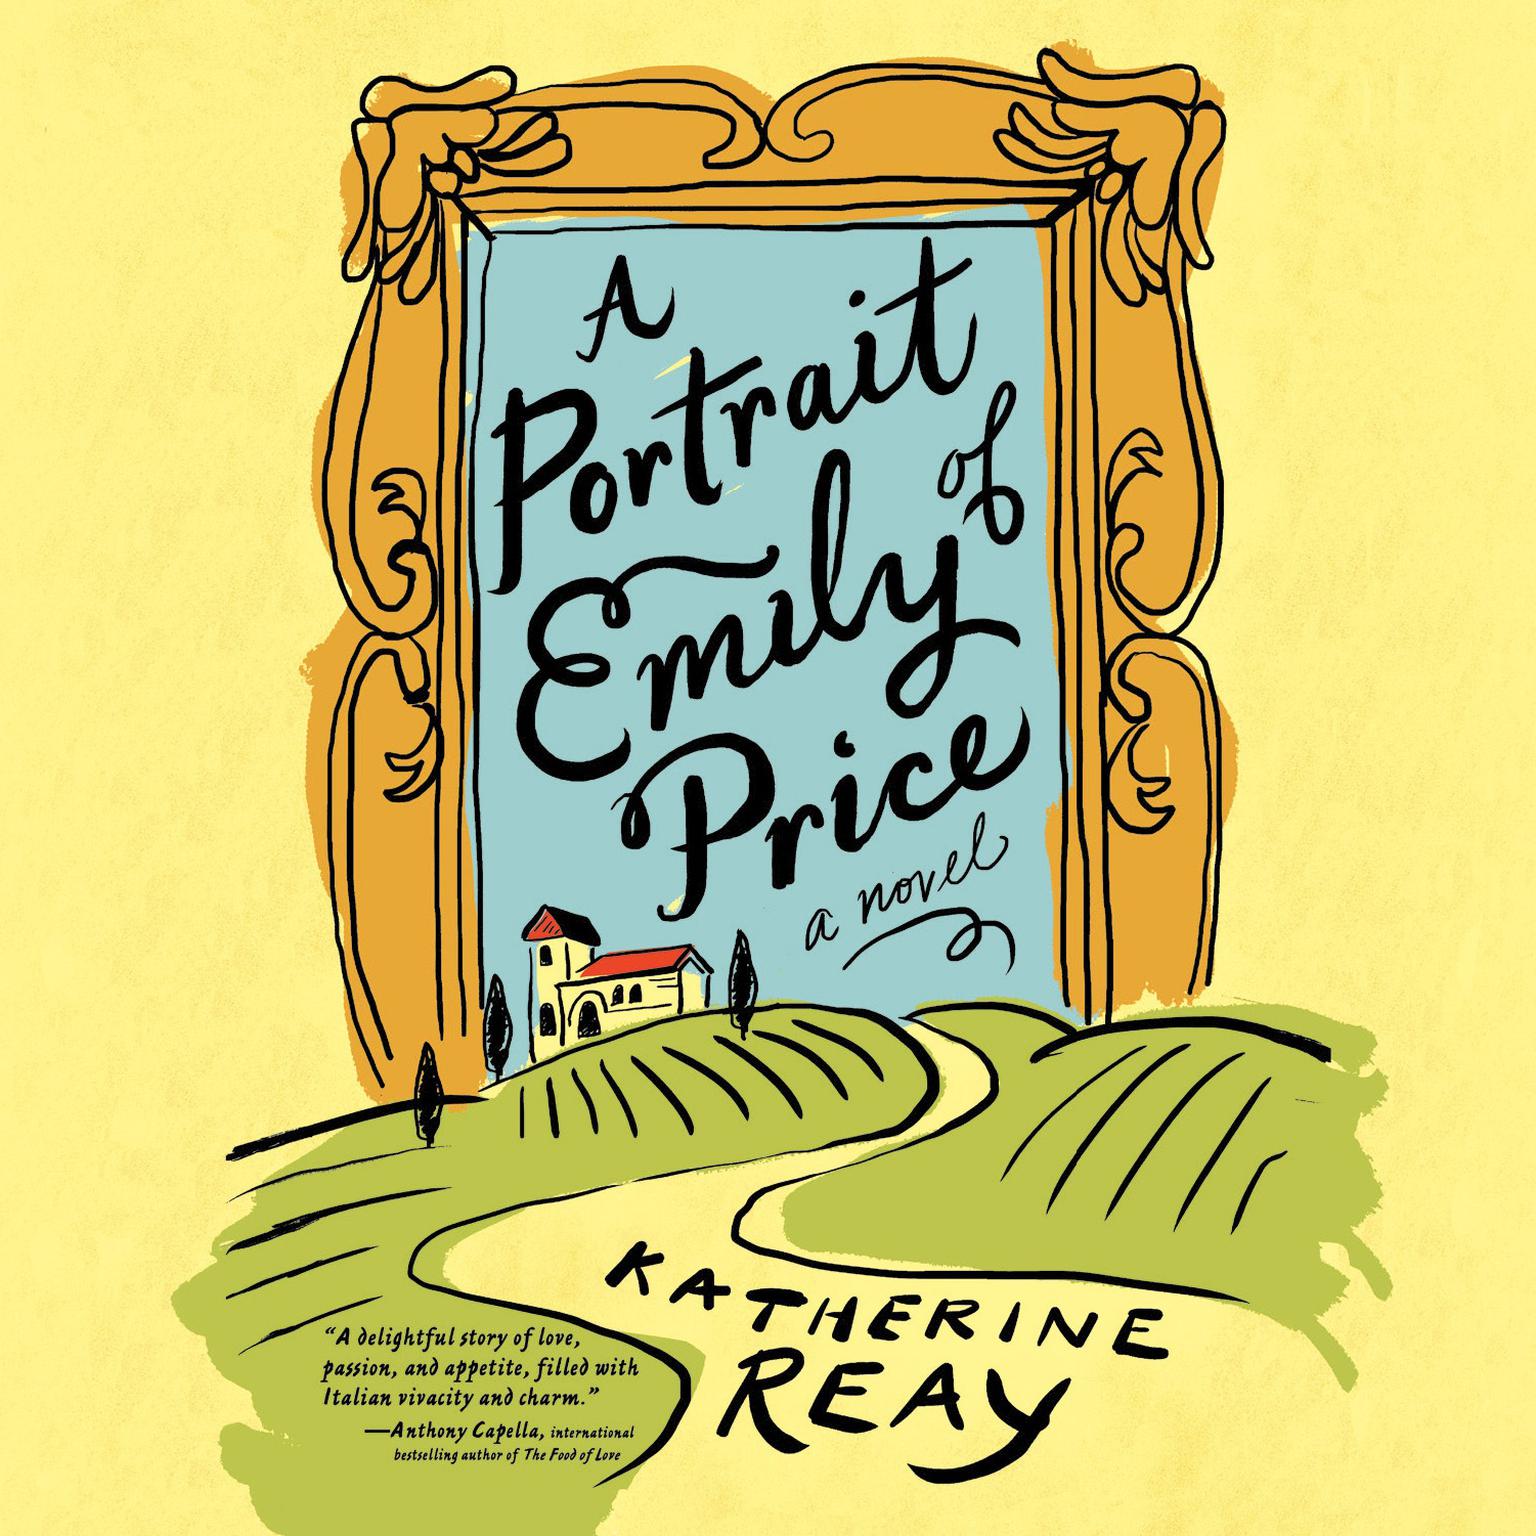 A Portrait of Emily Price: A Novel Audiobook, by Katherine Reay